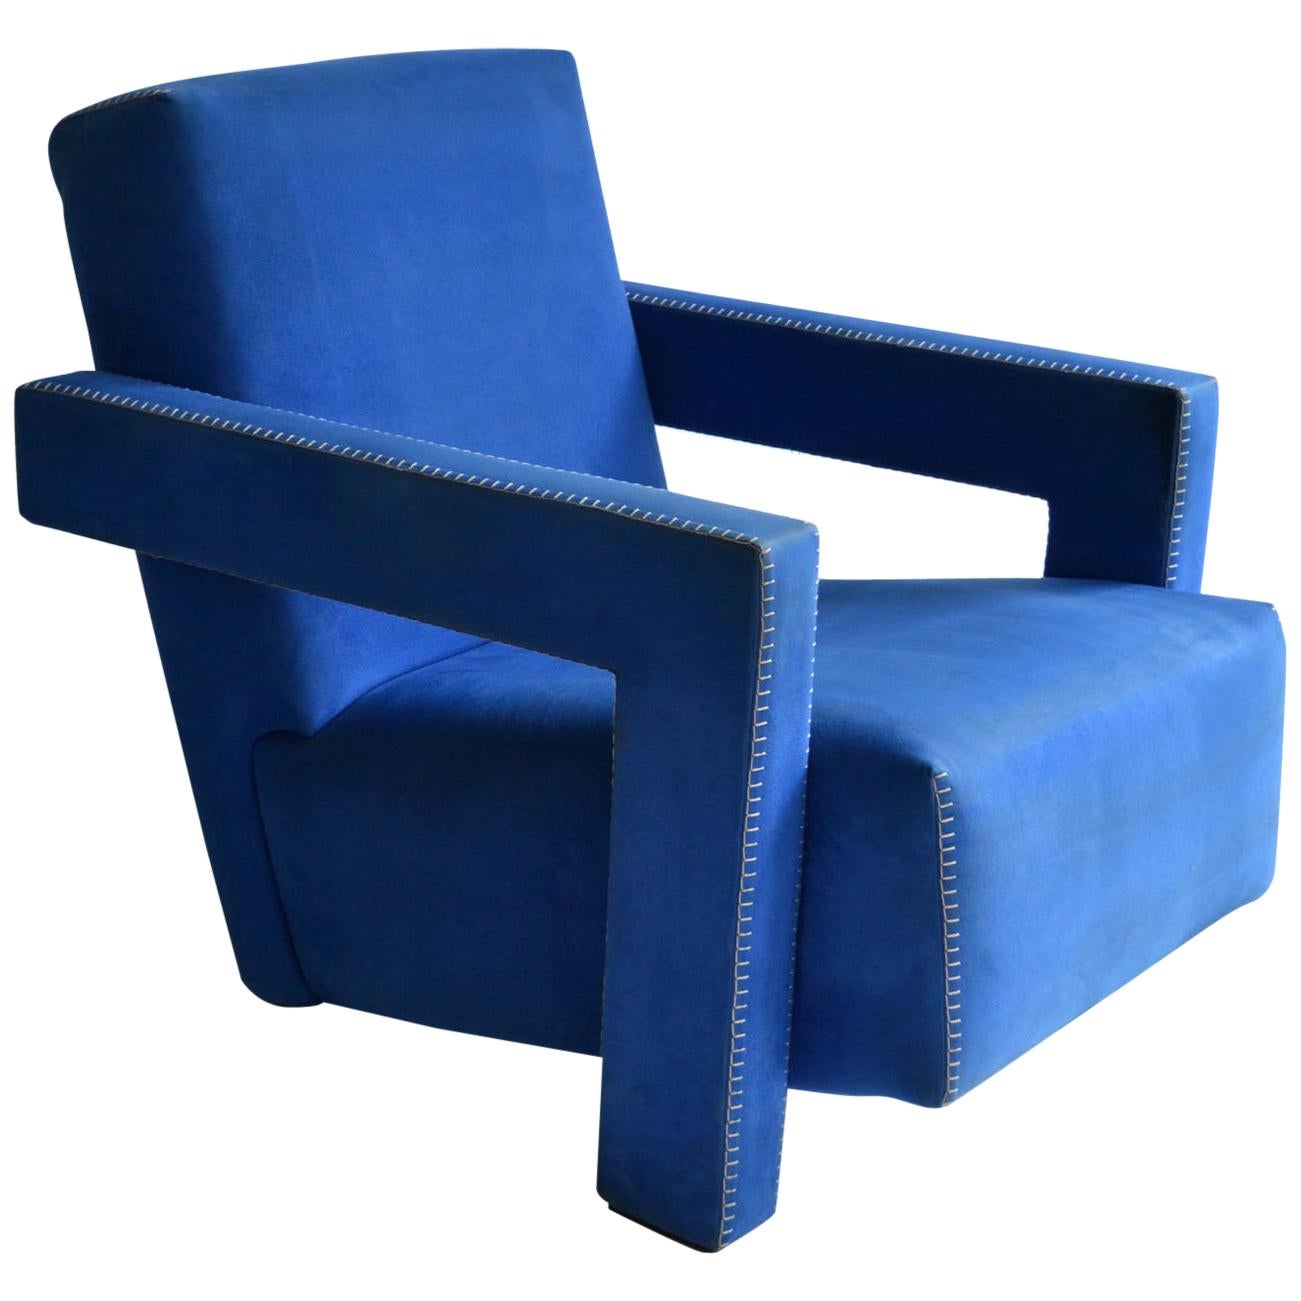 Blue 'Utrecht' Chair by Dutch Gerrit Rietveld for Cassina 1980s Italy